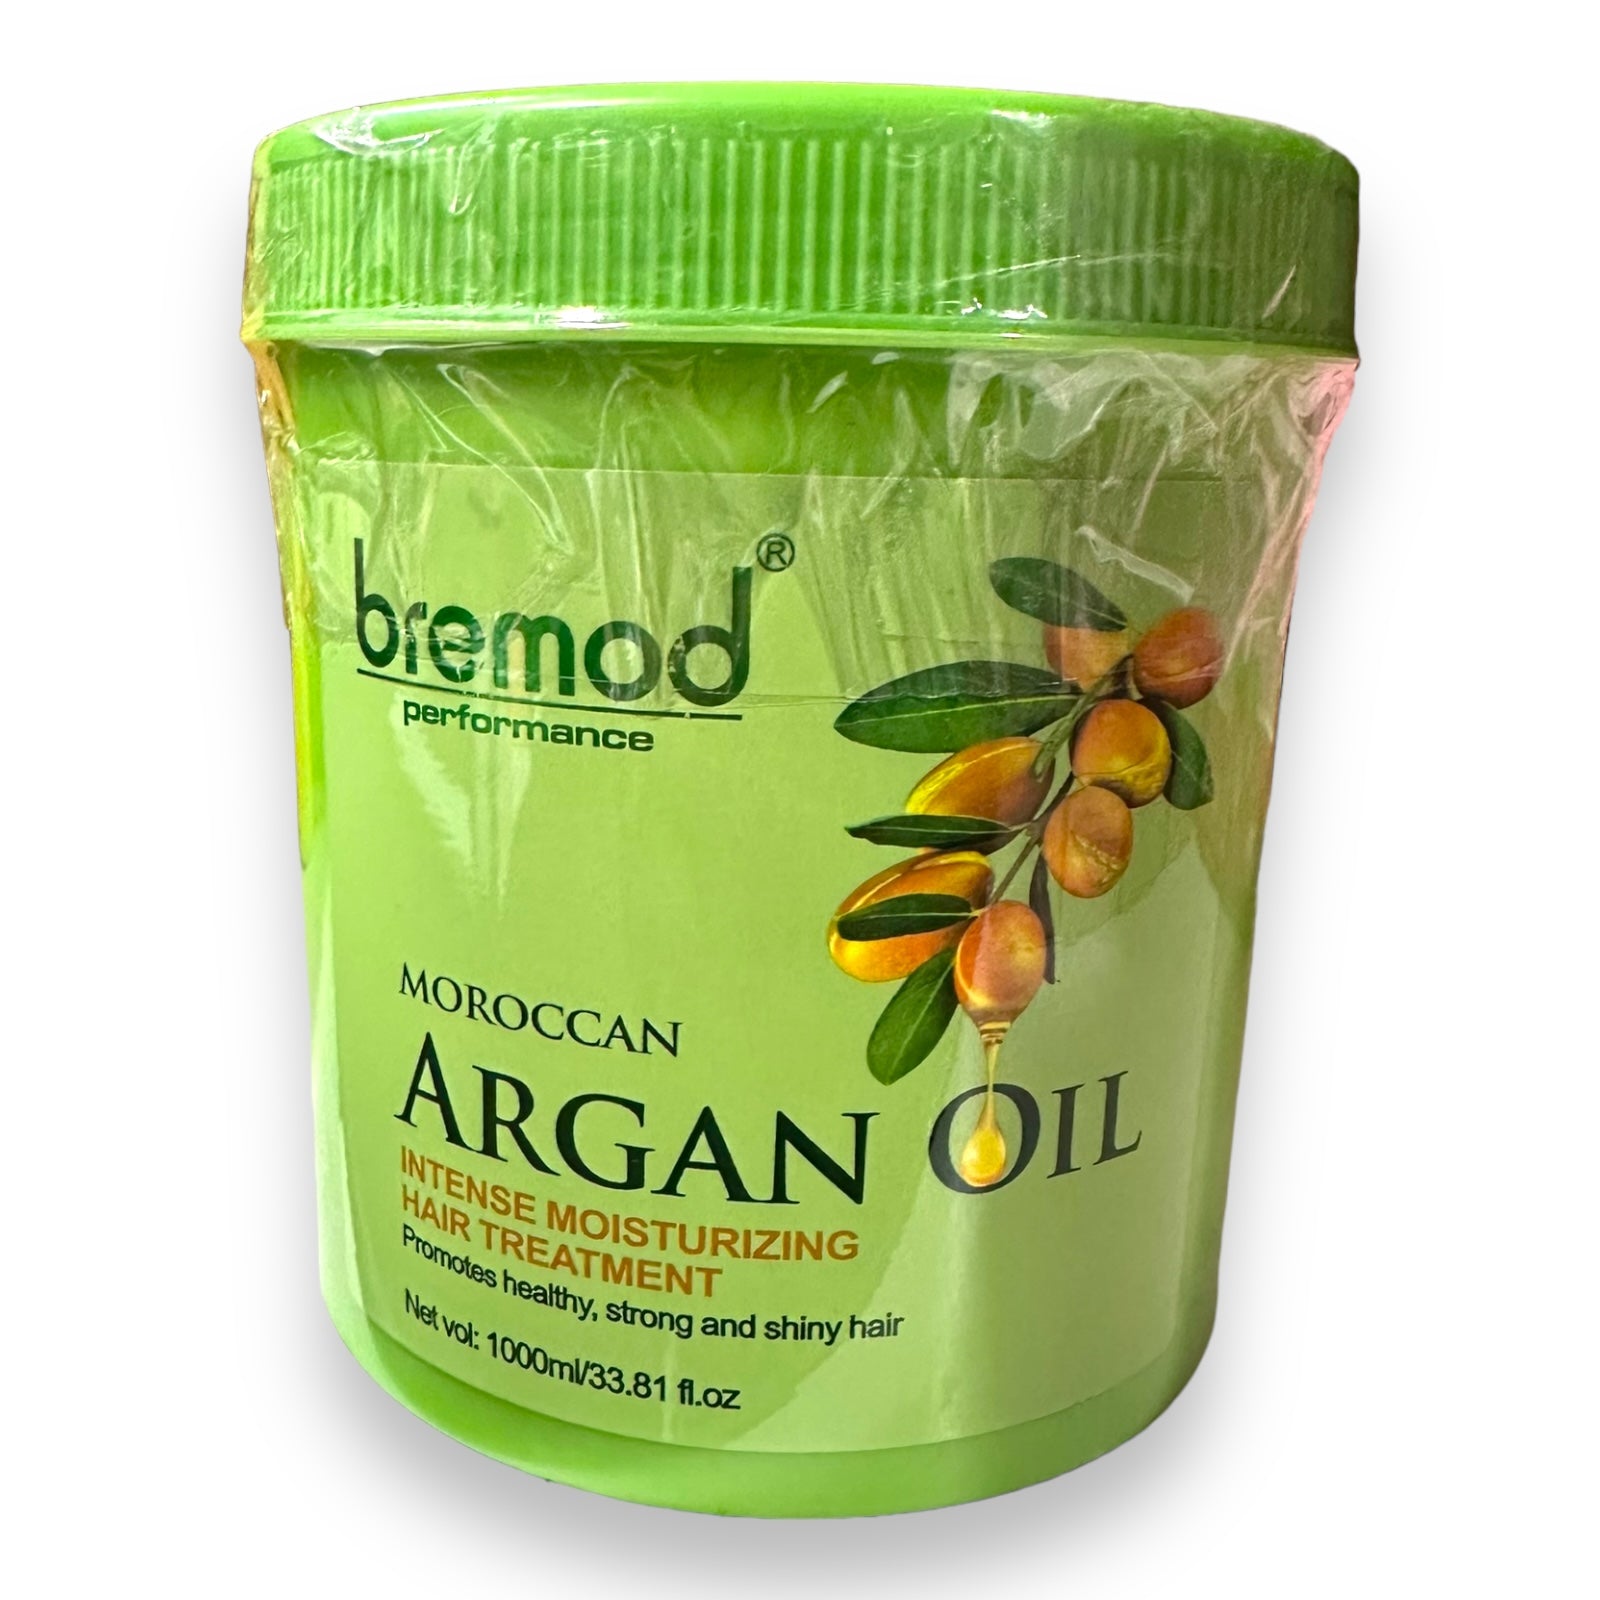 Bremod - Moroccan Argan Oil - Intense Moisturizing Hair Trearment 1000 ml